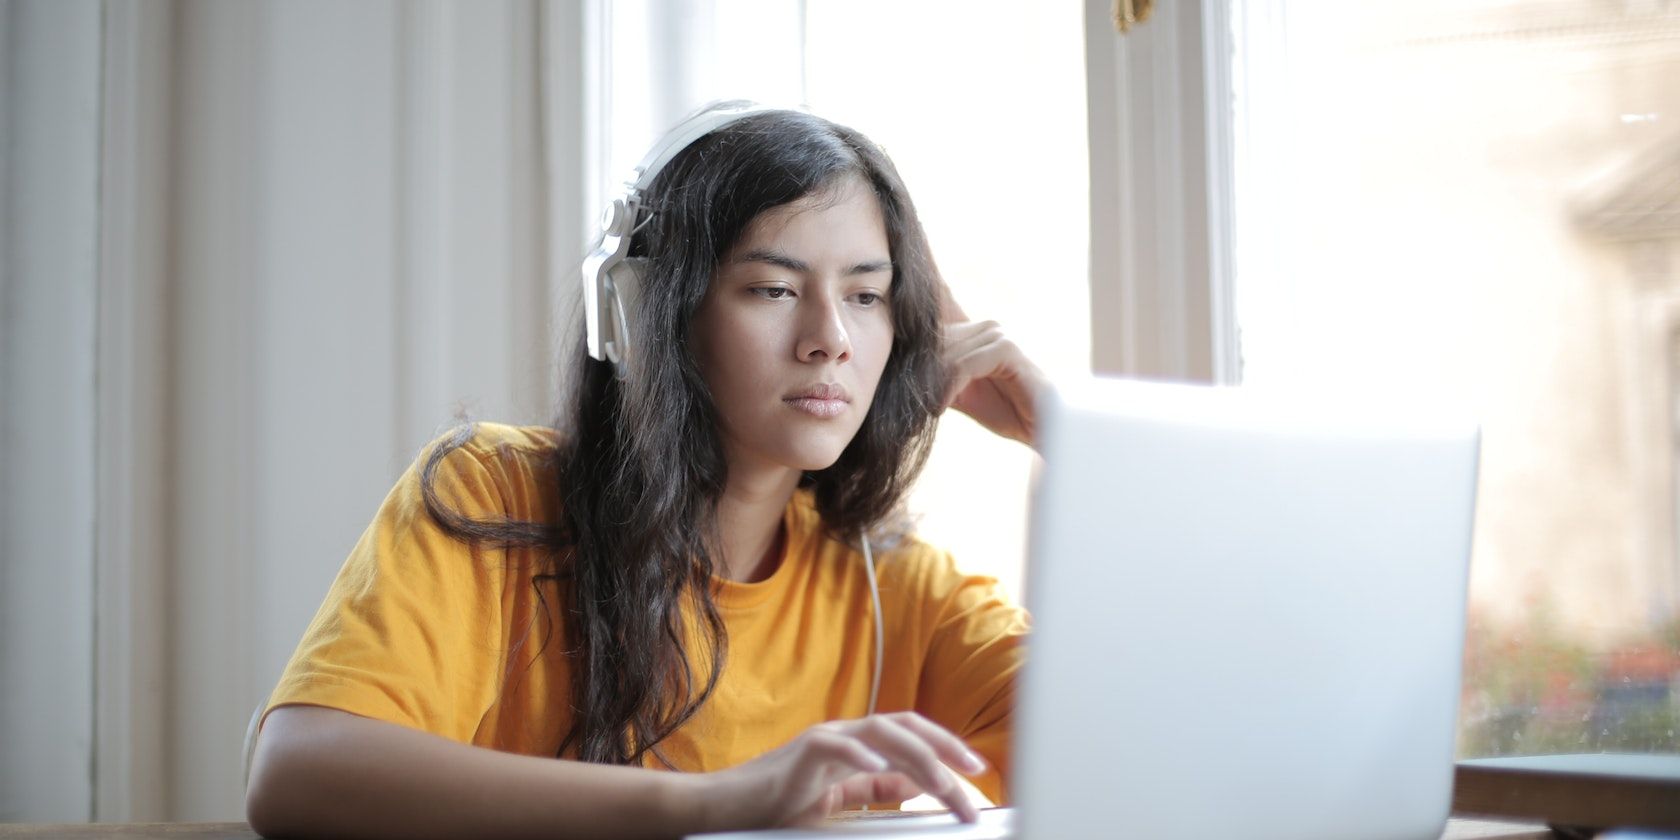 Woman in yellow shirt wearing headphones and using MacBook